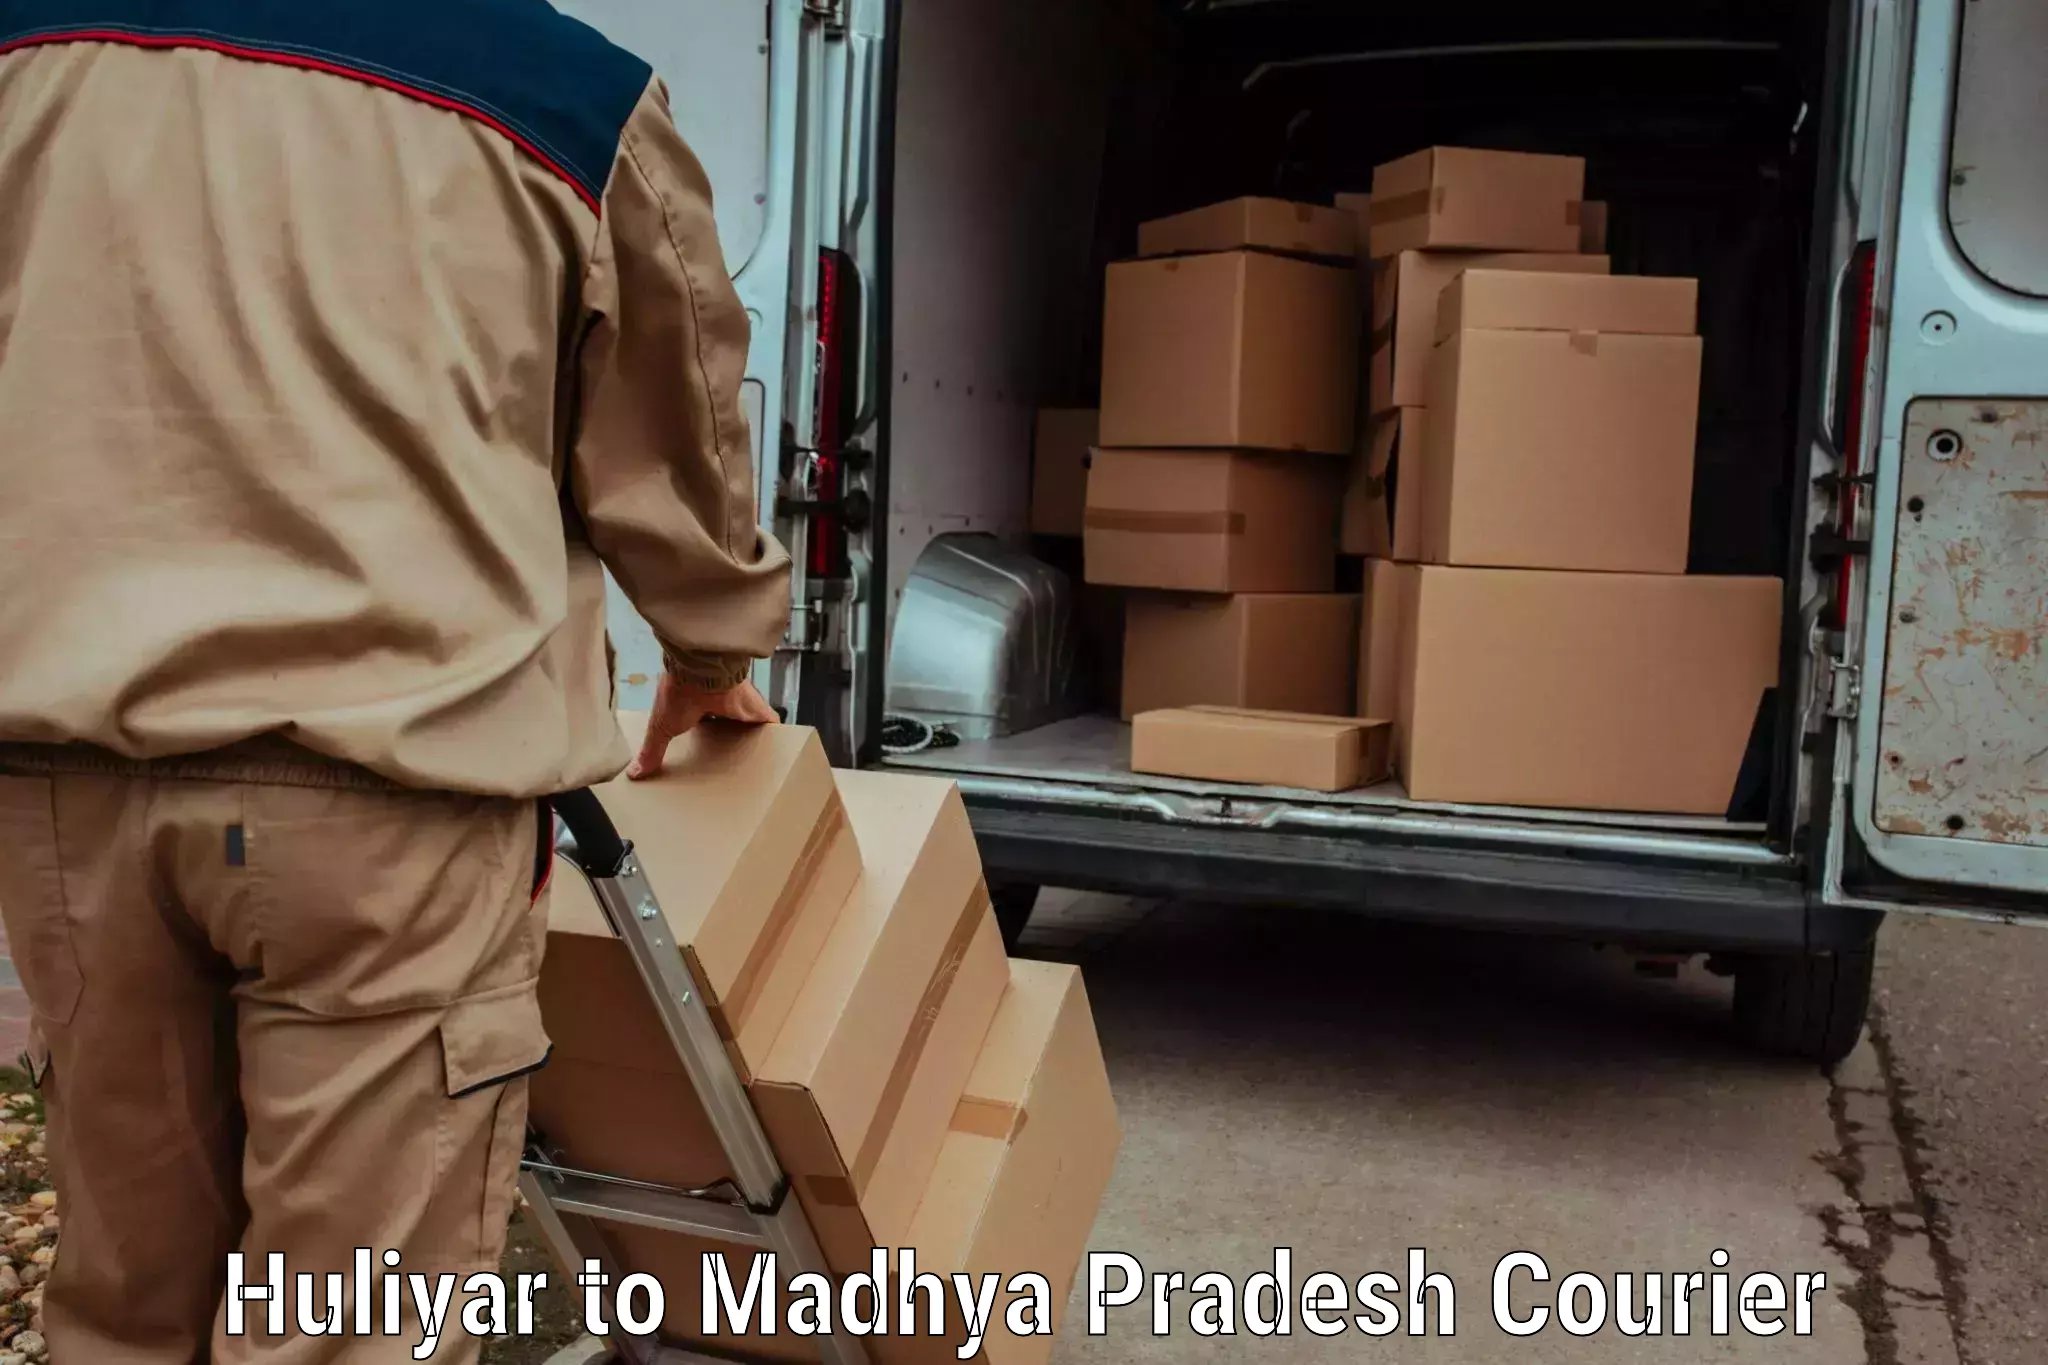 Affordable parcel service in Huliyar to Niwari